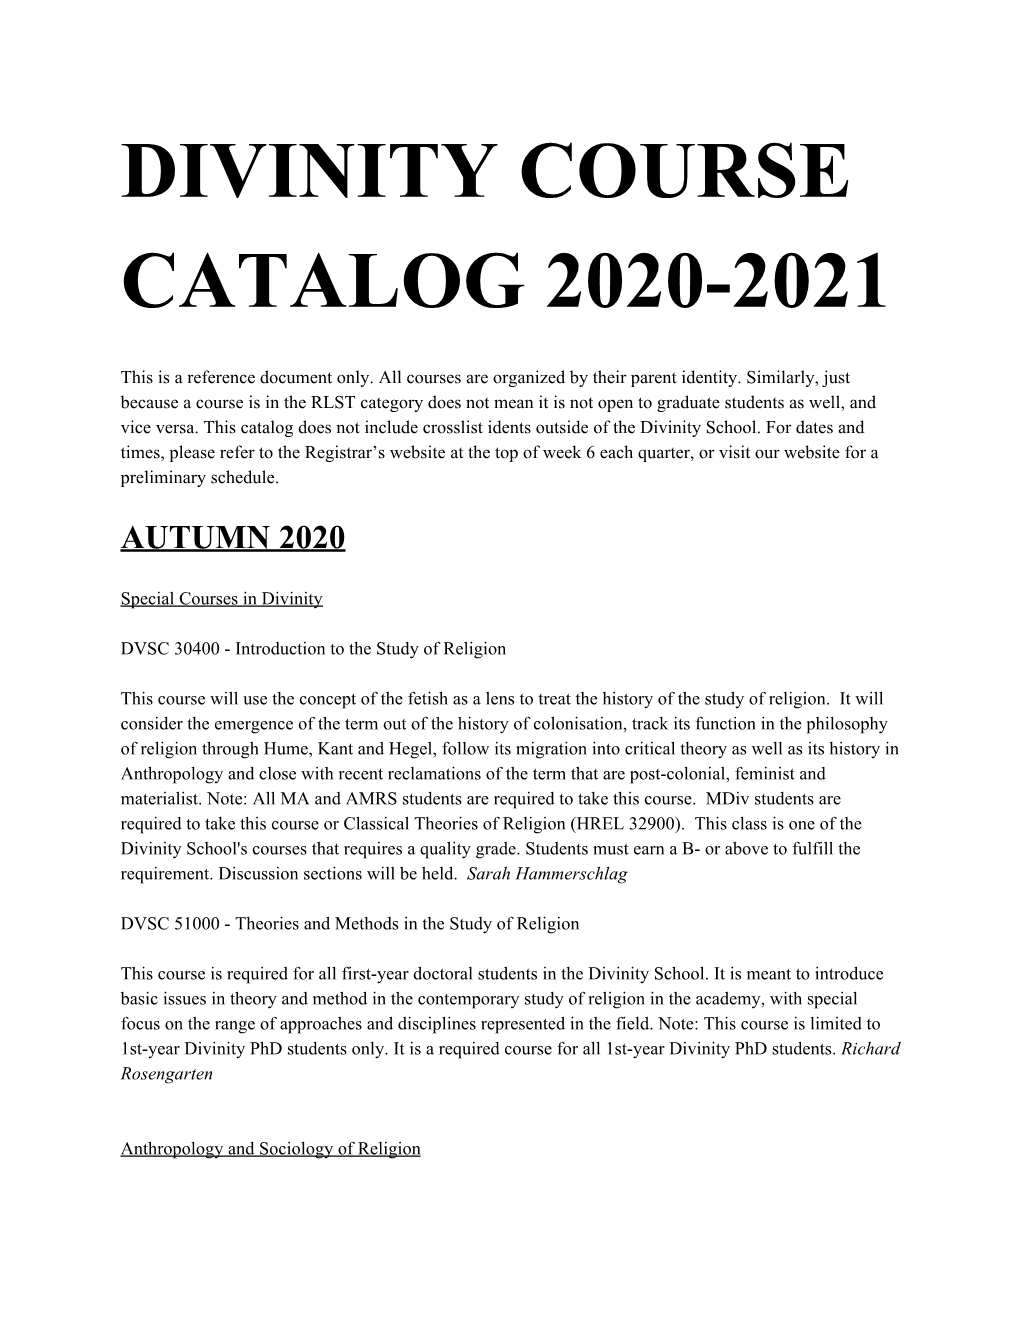 Divinity Course Catalog 2020-2021